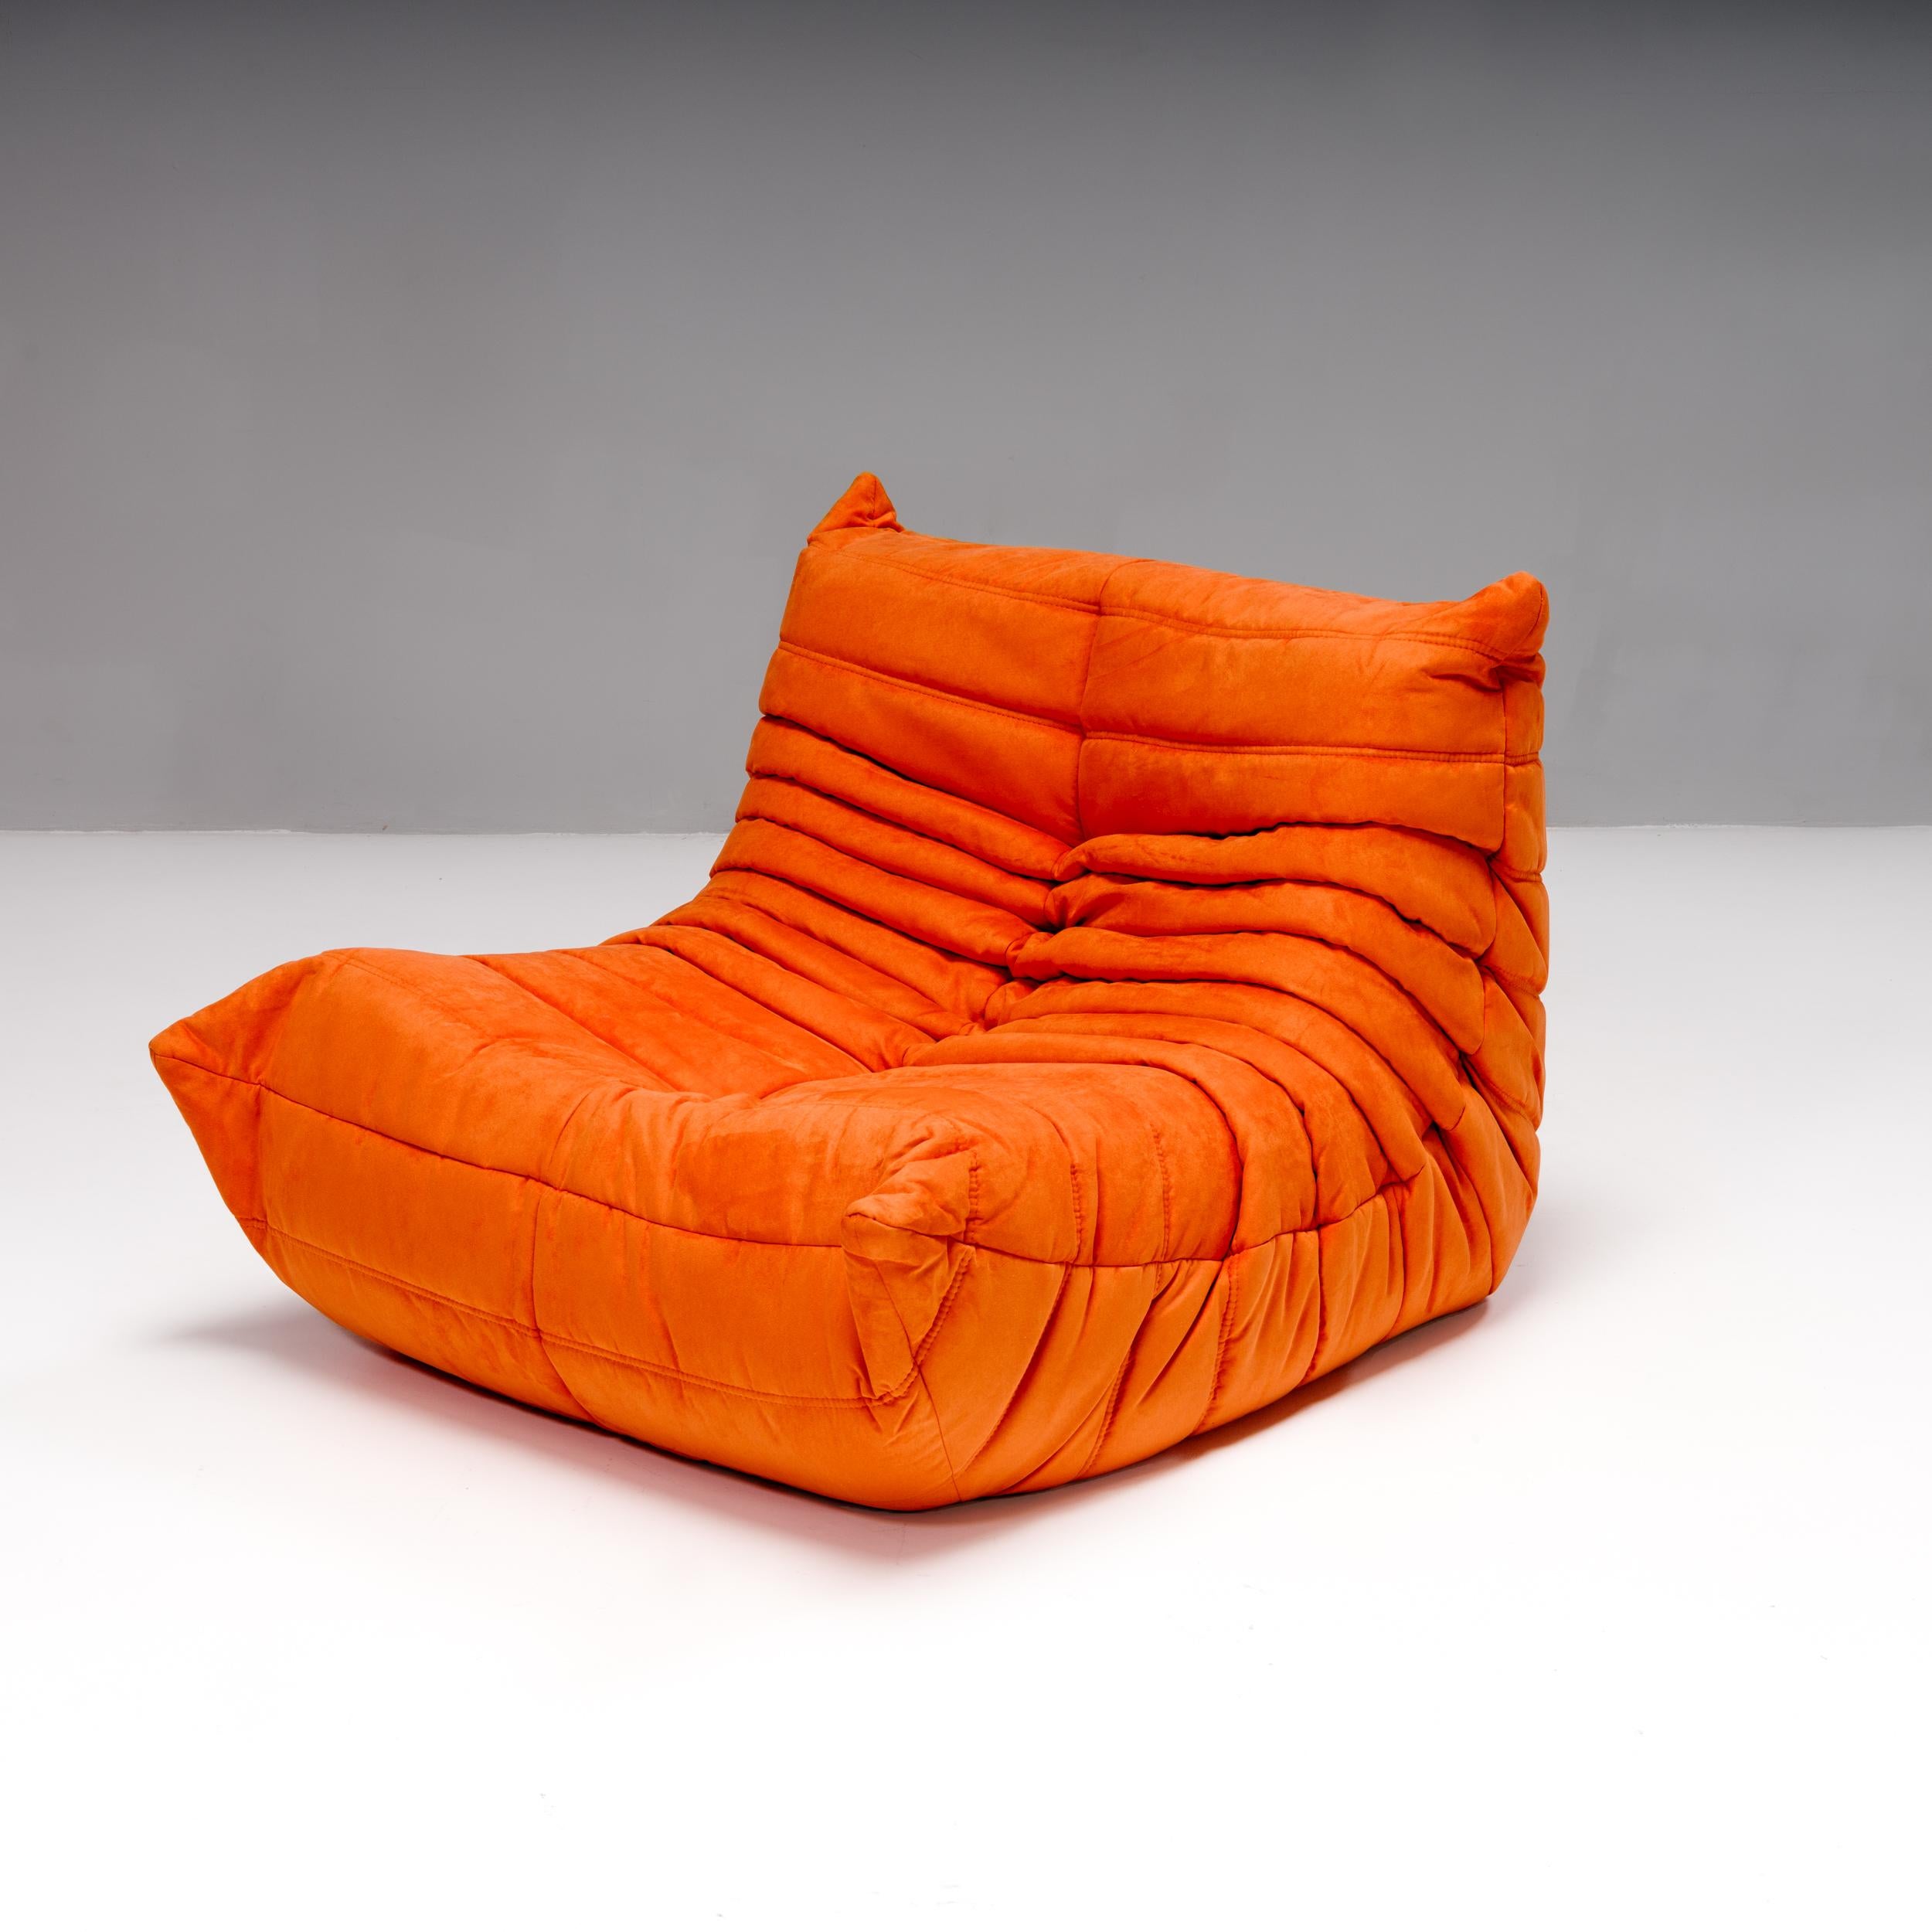 Fabric Michel Ducaroy for Ligne Roset Orange Togo Modular Sofas, Set of 5 For Sale